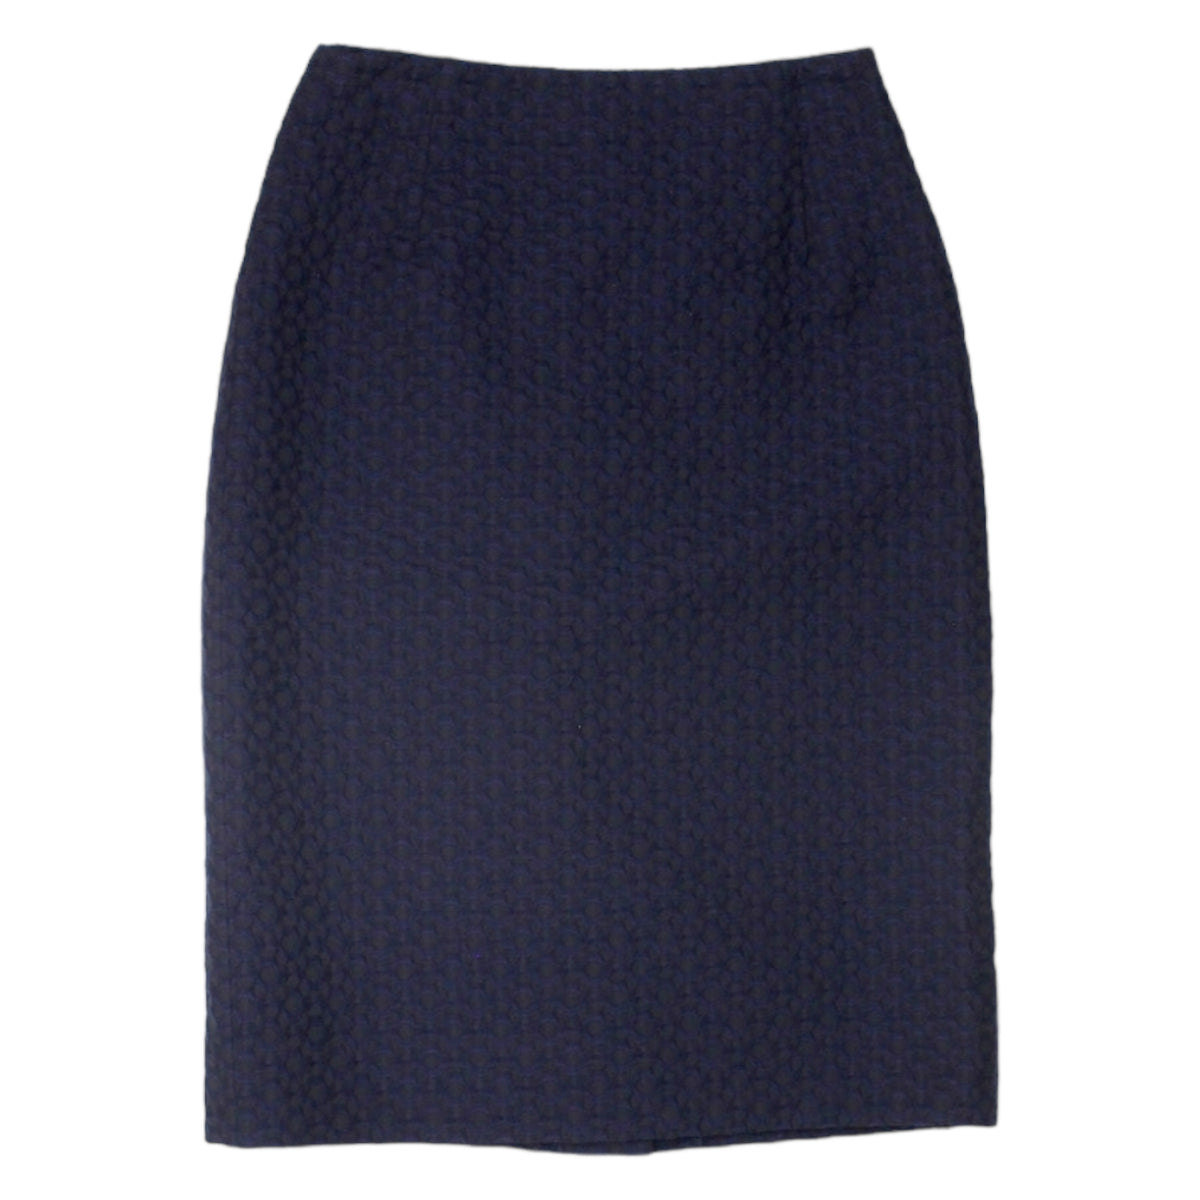 Orla Kiely Blue/Black Jacquard Skirt